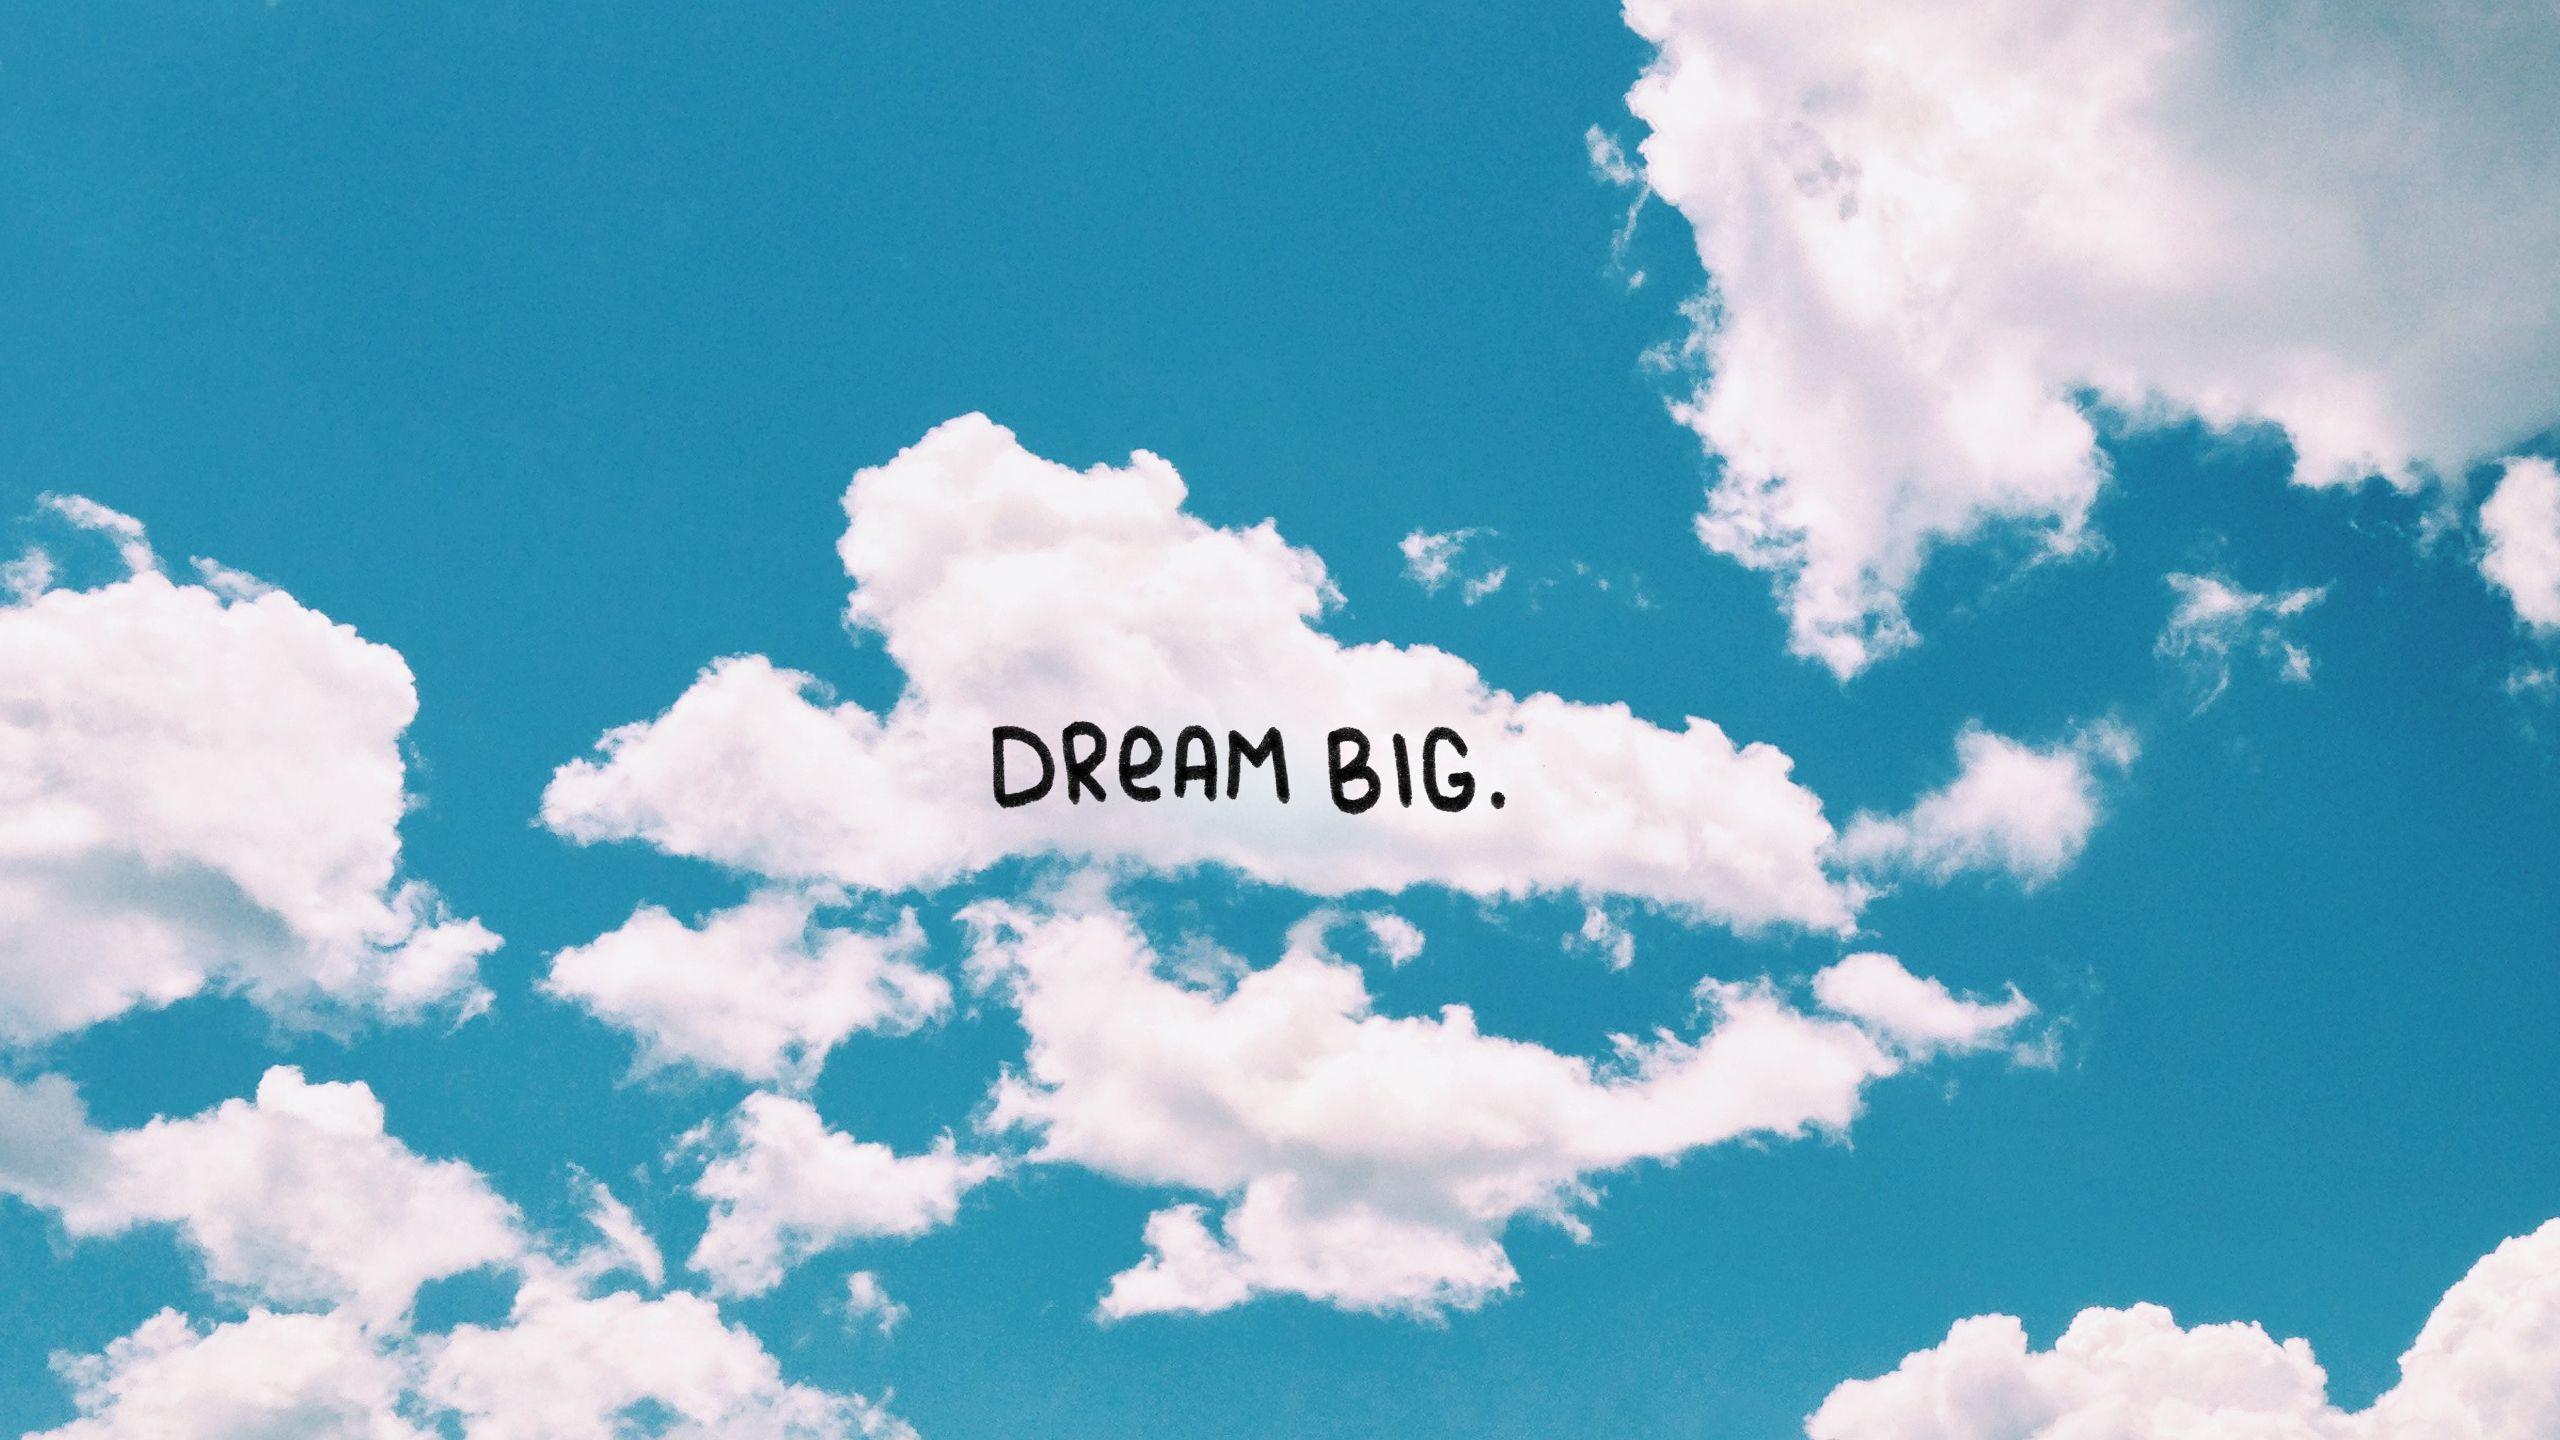 Dream big clouds blue sky desktop wallpaper background. Papel de